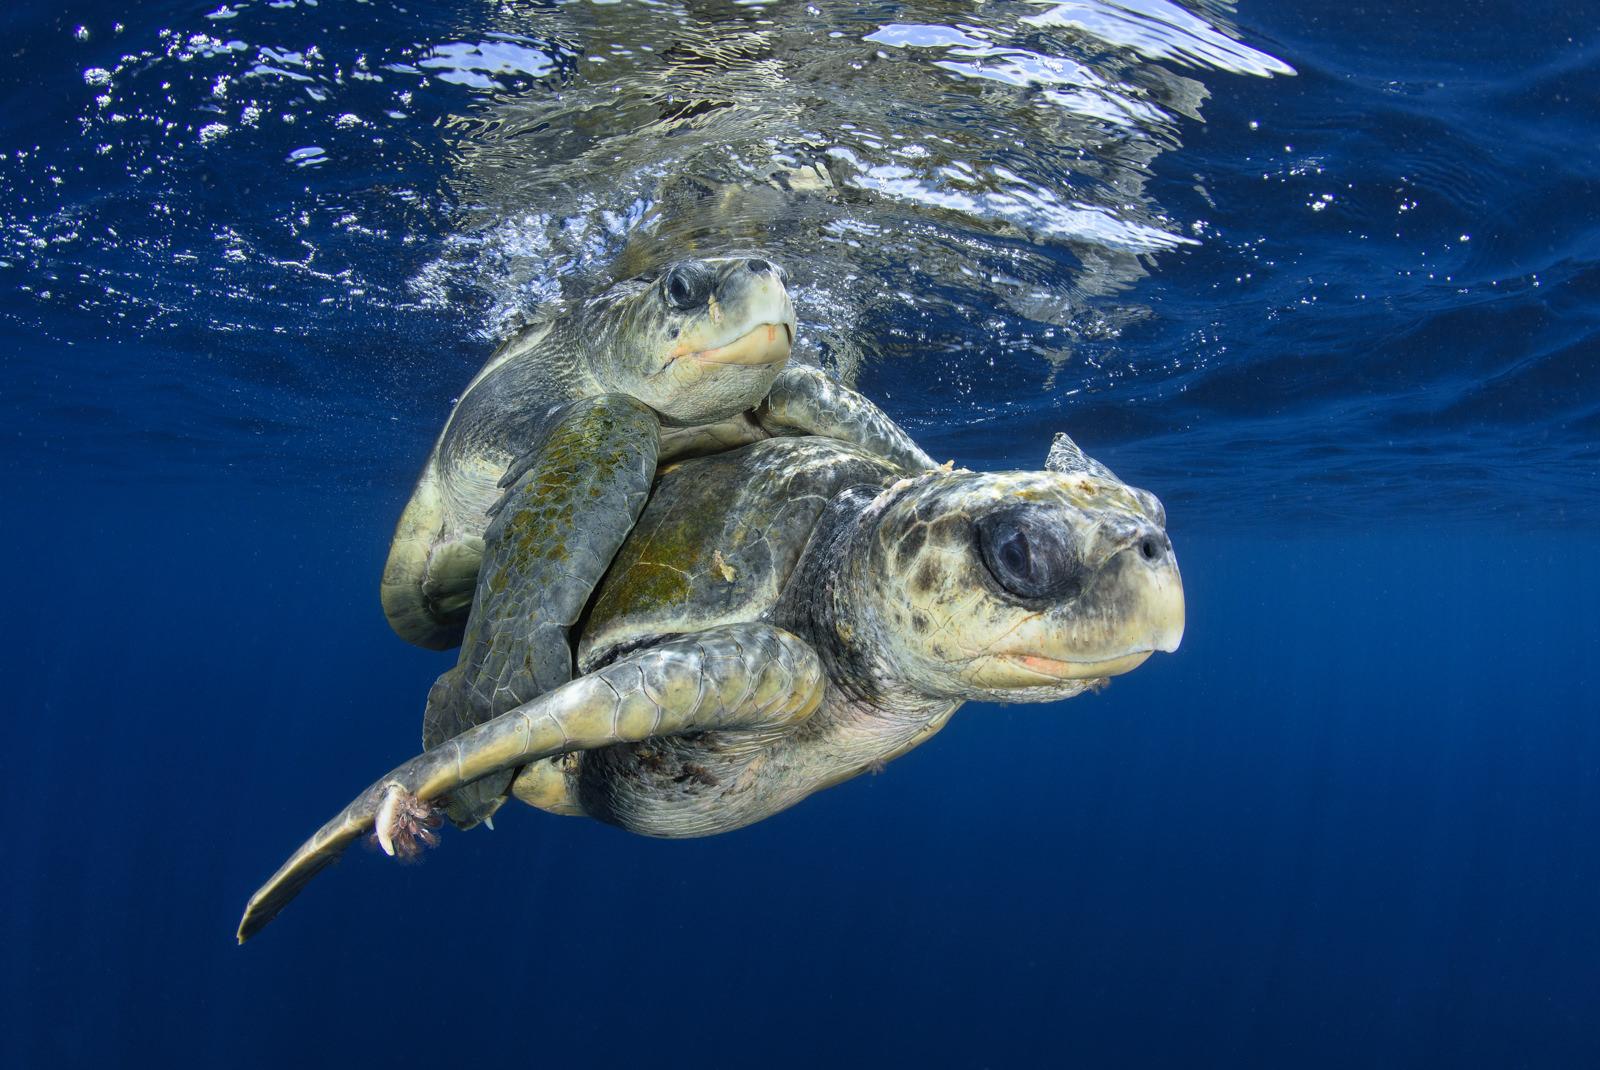 Underwater Turtles by Damien Mauric